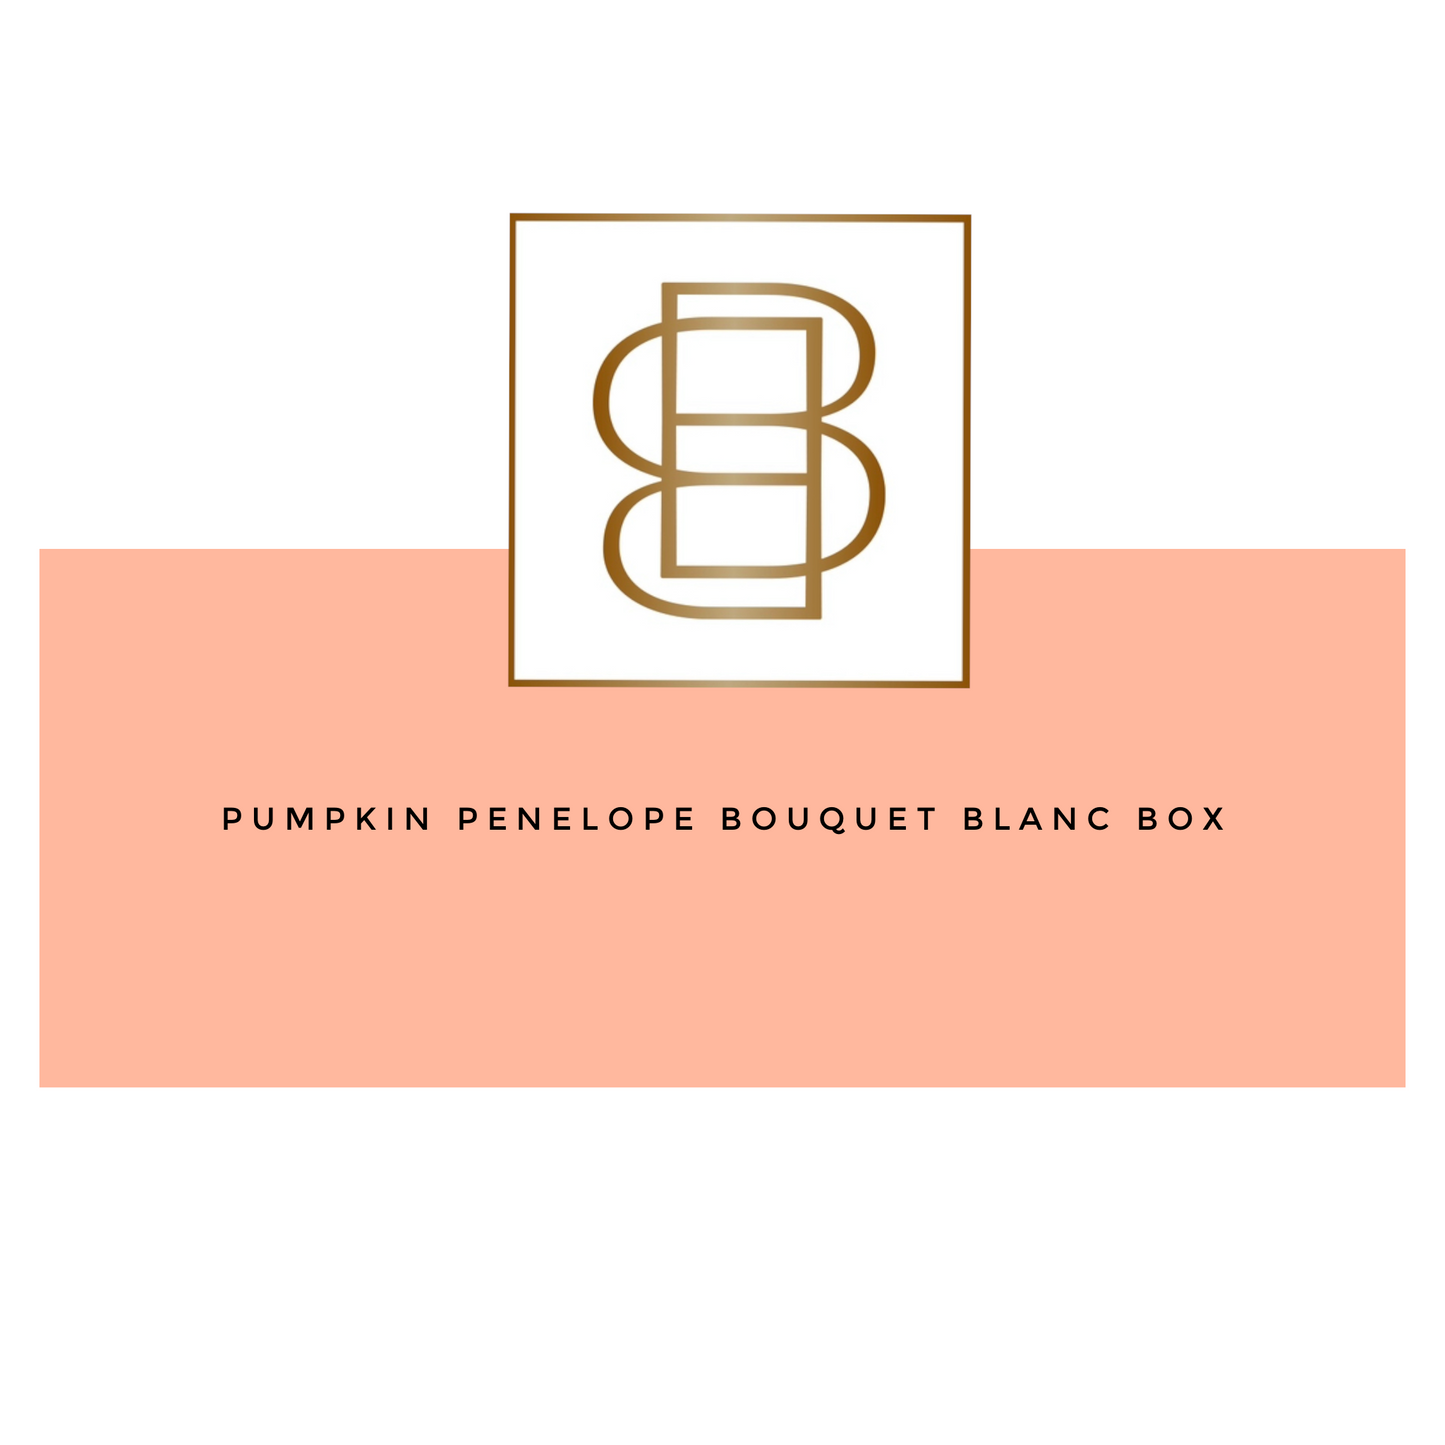 Pumpkin Penelope Bouquet Blanc Box